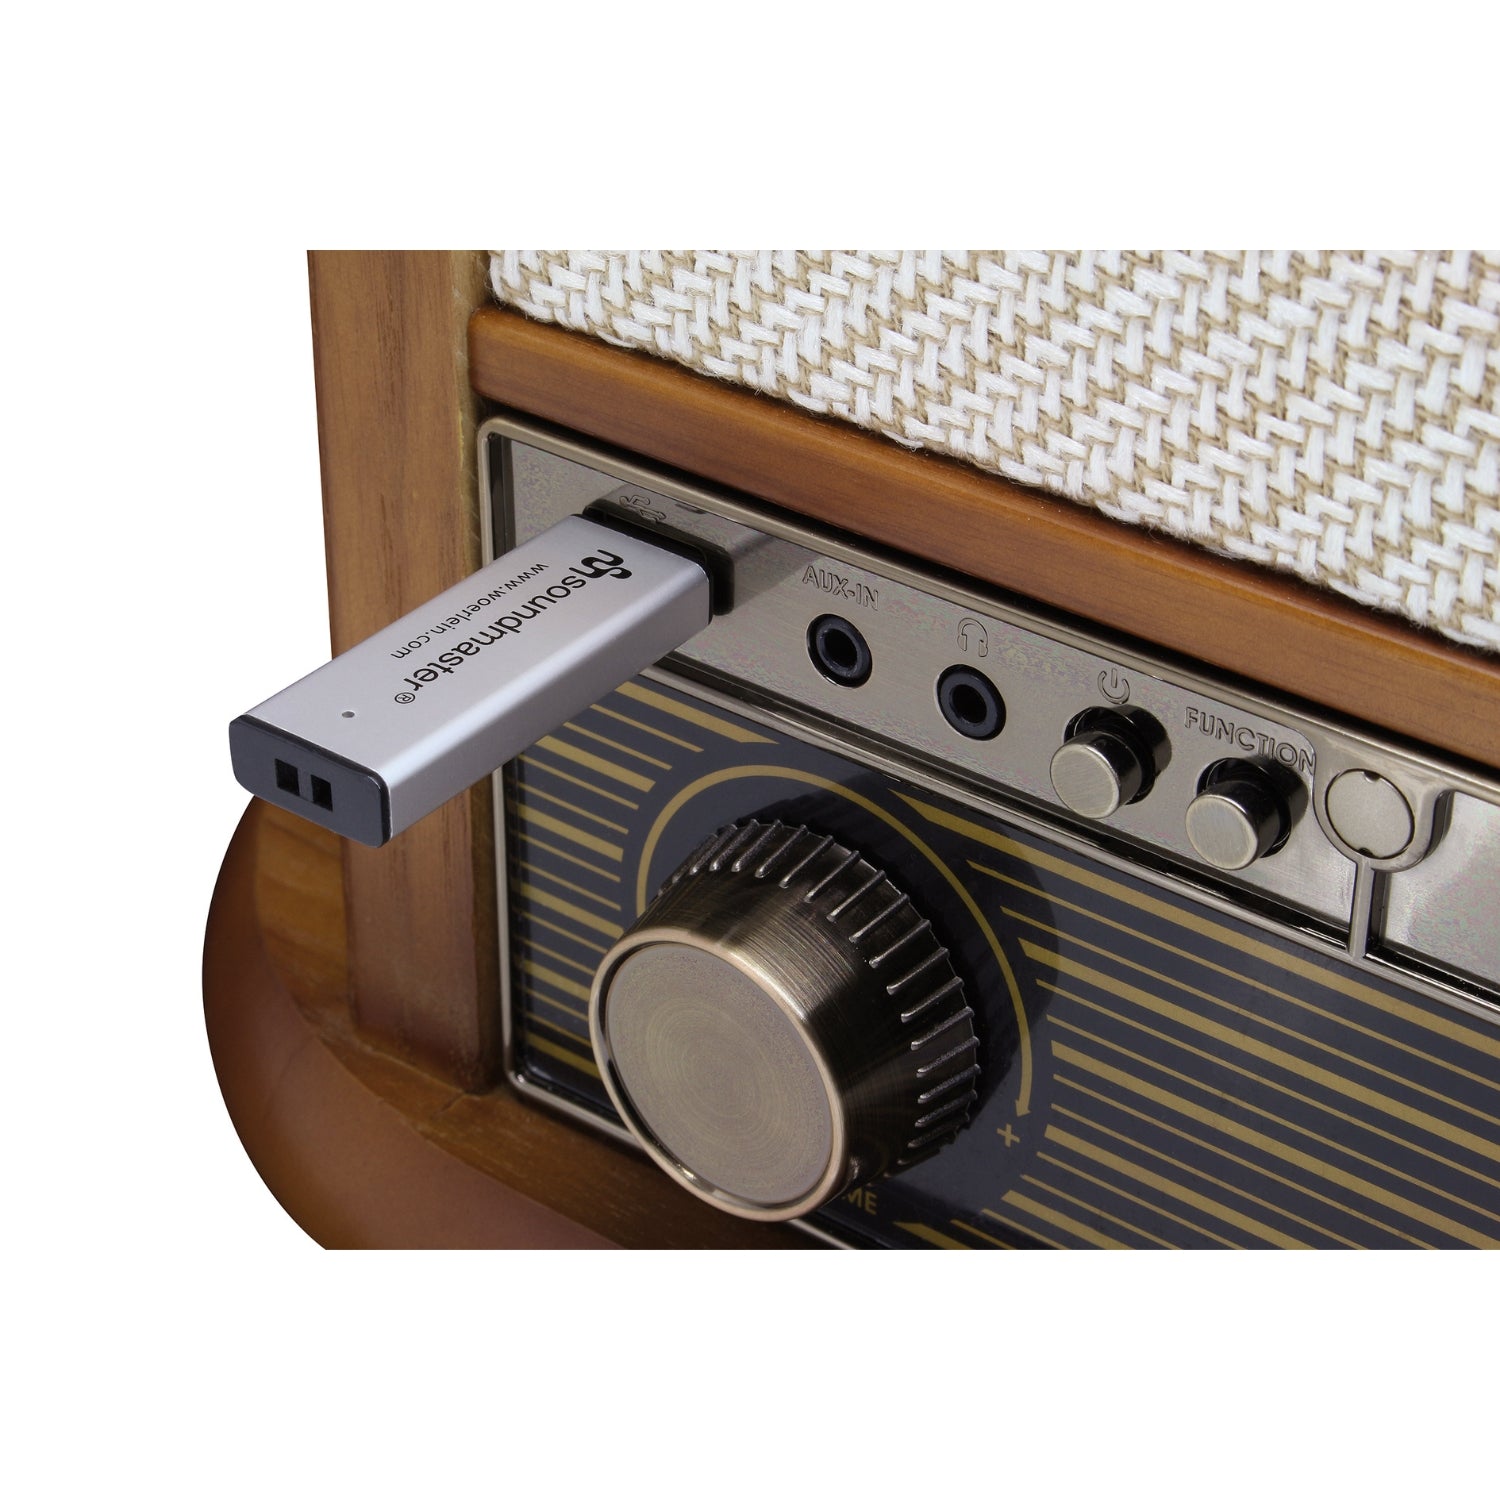 Soundmaster NR566BE 7-in-1 Nostalgie Stereoanlage mit Plattenspieler Audio Technica Magnettonabnehmer | Digitalradio DAB+ | CD-MP3 | USB | Kassette | Bluetooth | Digitalisierungs-Funktion | Equalizer